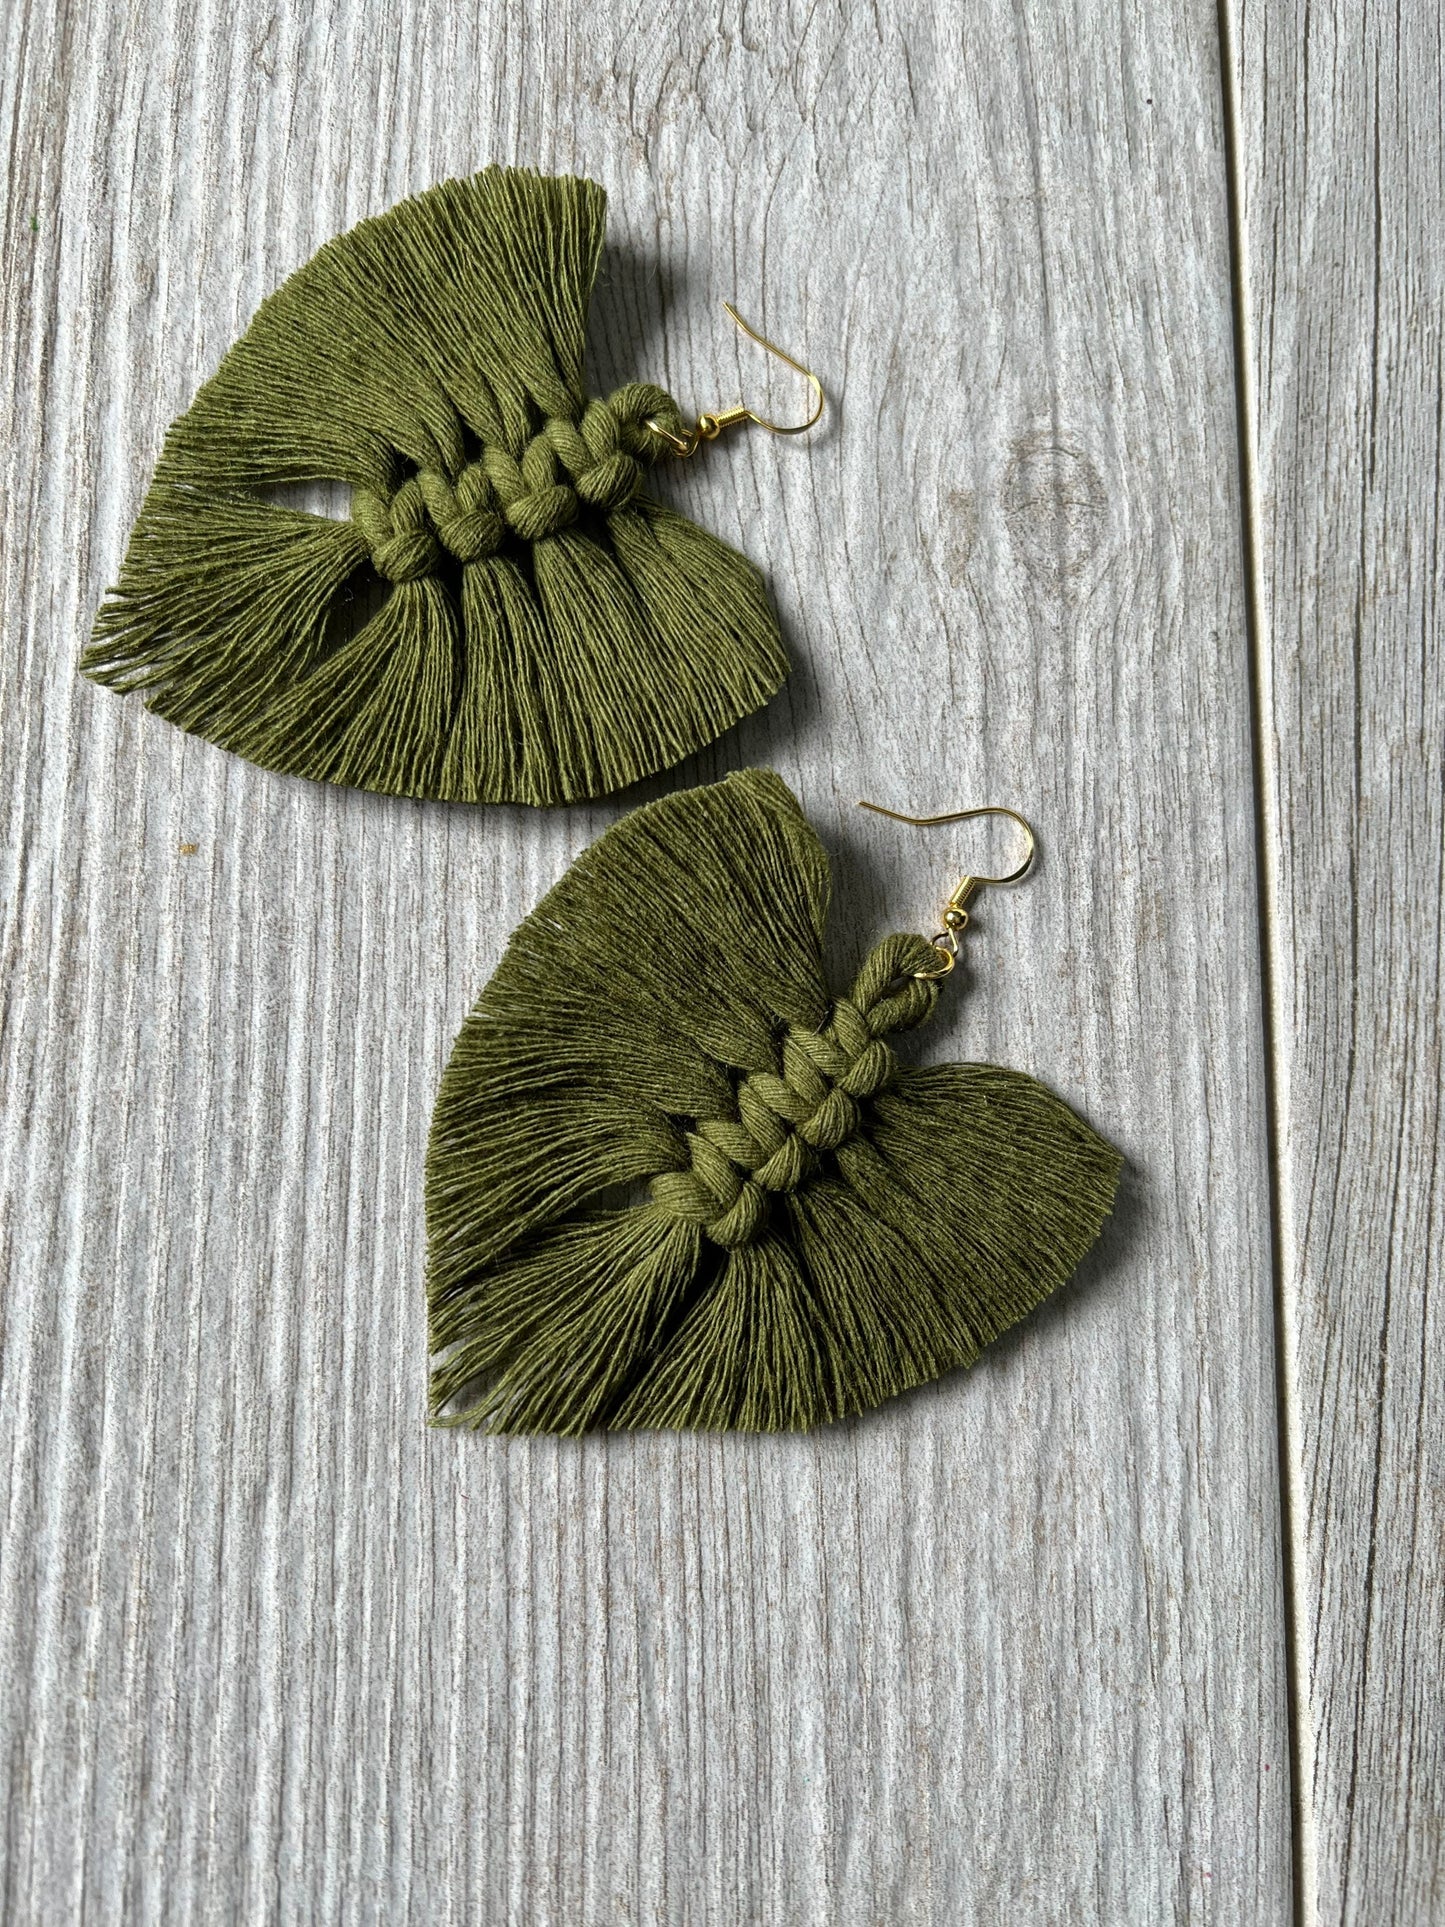 St. Patrick's Day Earrings. Sage Green Macrame Feather Earrings. Festival Earrings. Boho Macrame Feathers.